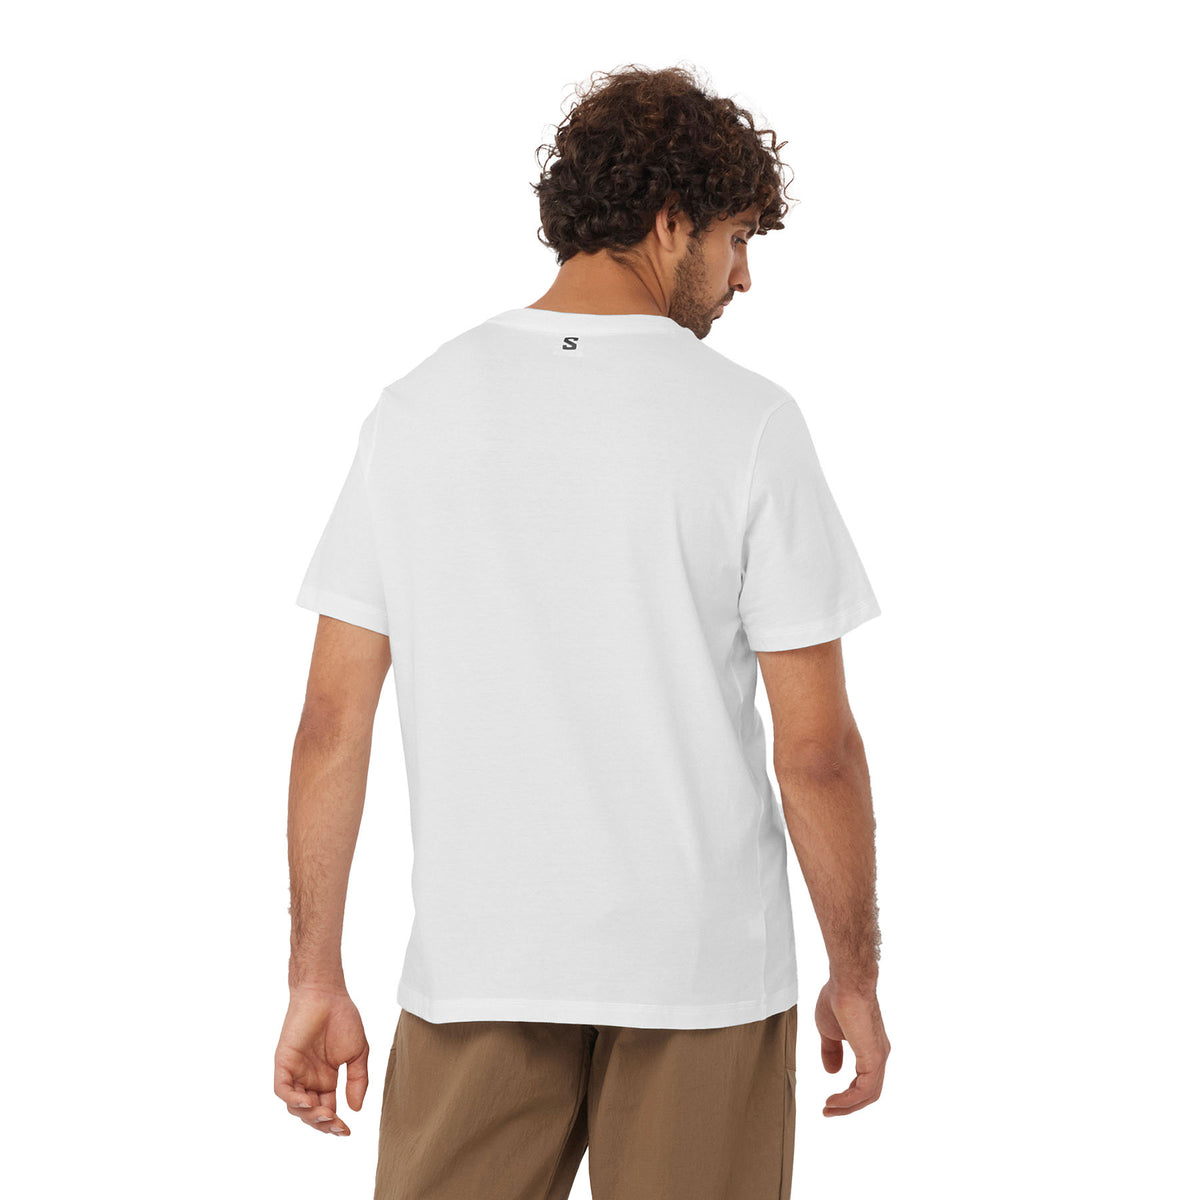 Salomon Men's Salomon Logo Performance Short Sleeve T-shirt 